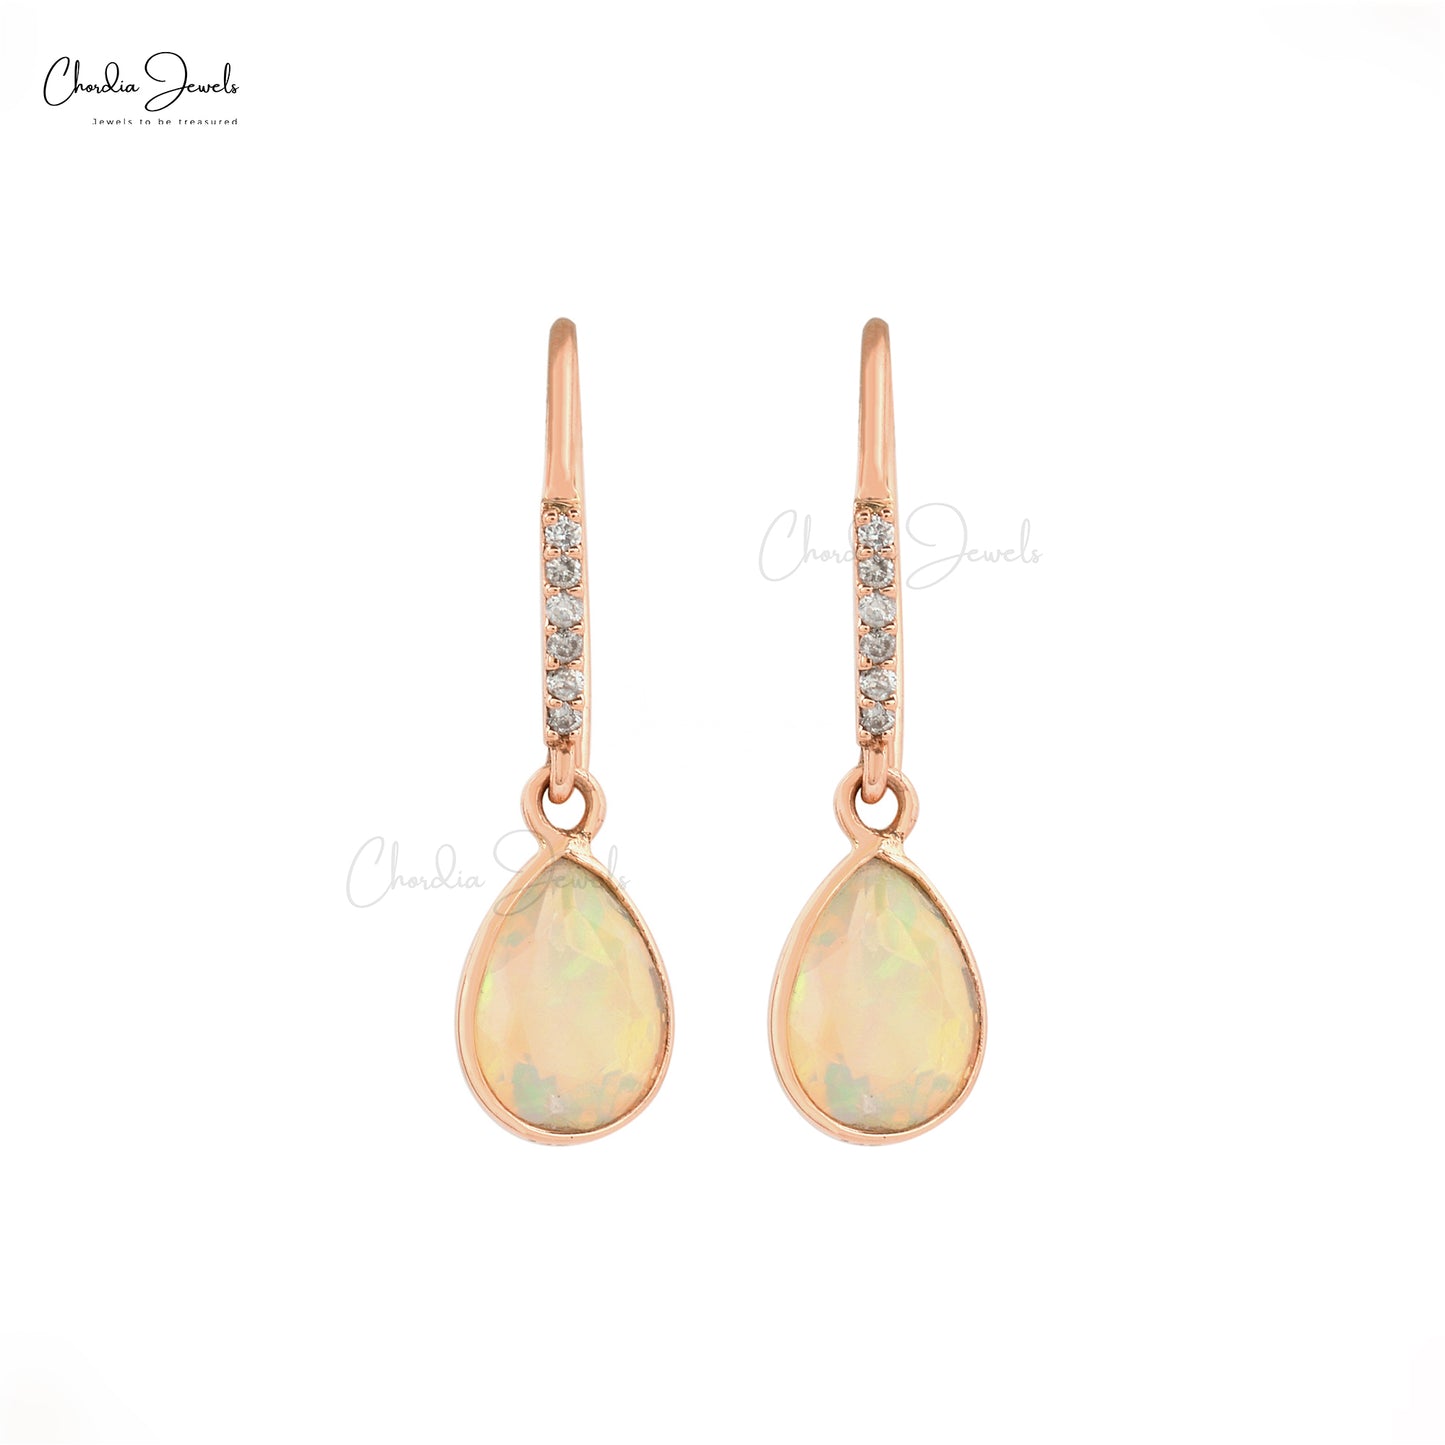 Authentic Opal Gorgeous Earrings 14k Solid Rose Gold Earrings 1mm Round Cut Certified White Diamond Earrings For Women's